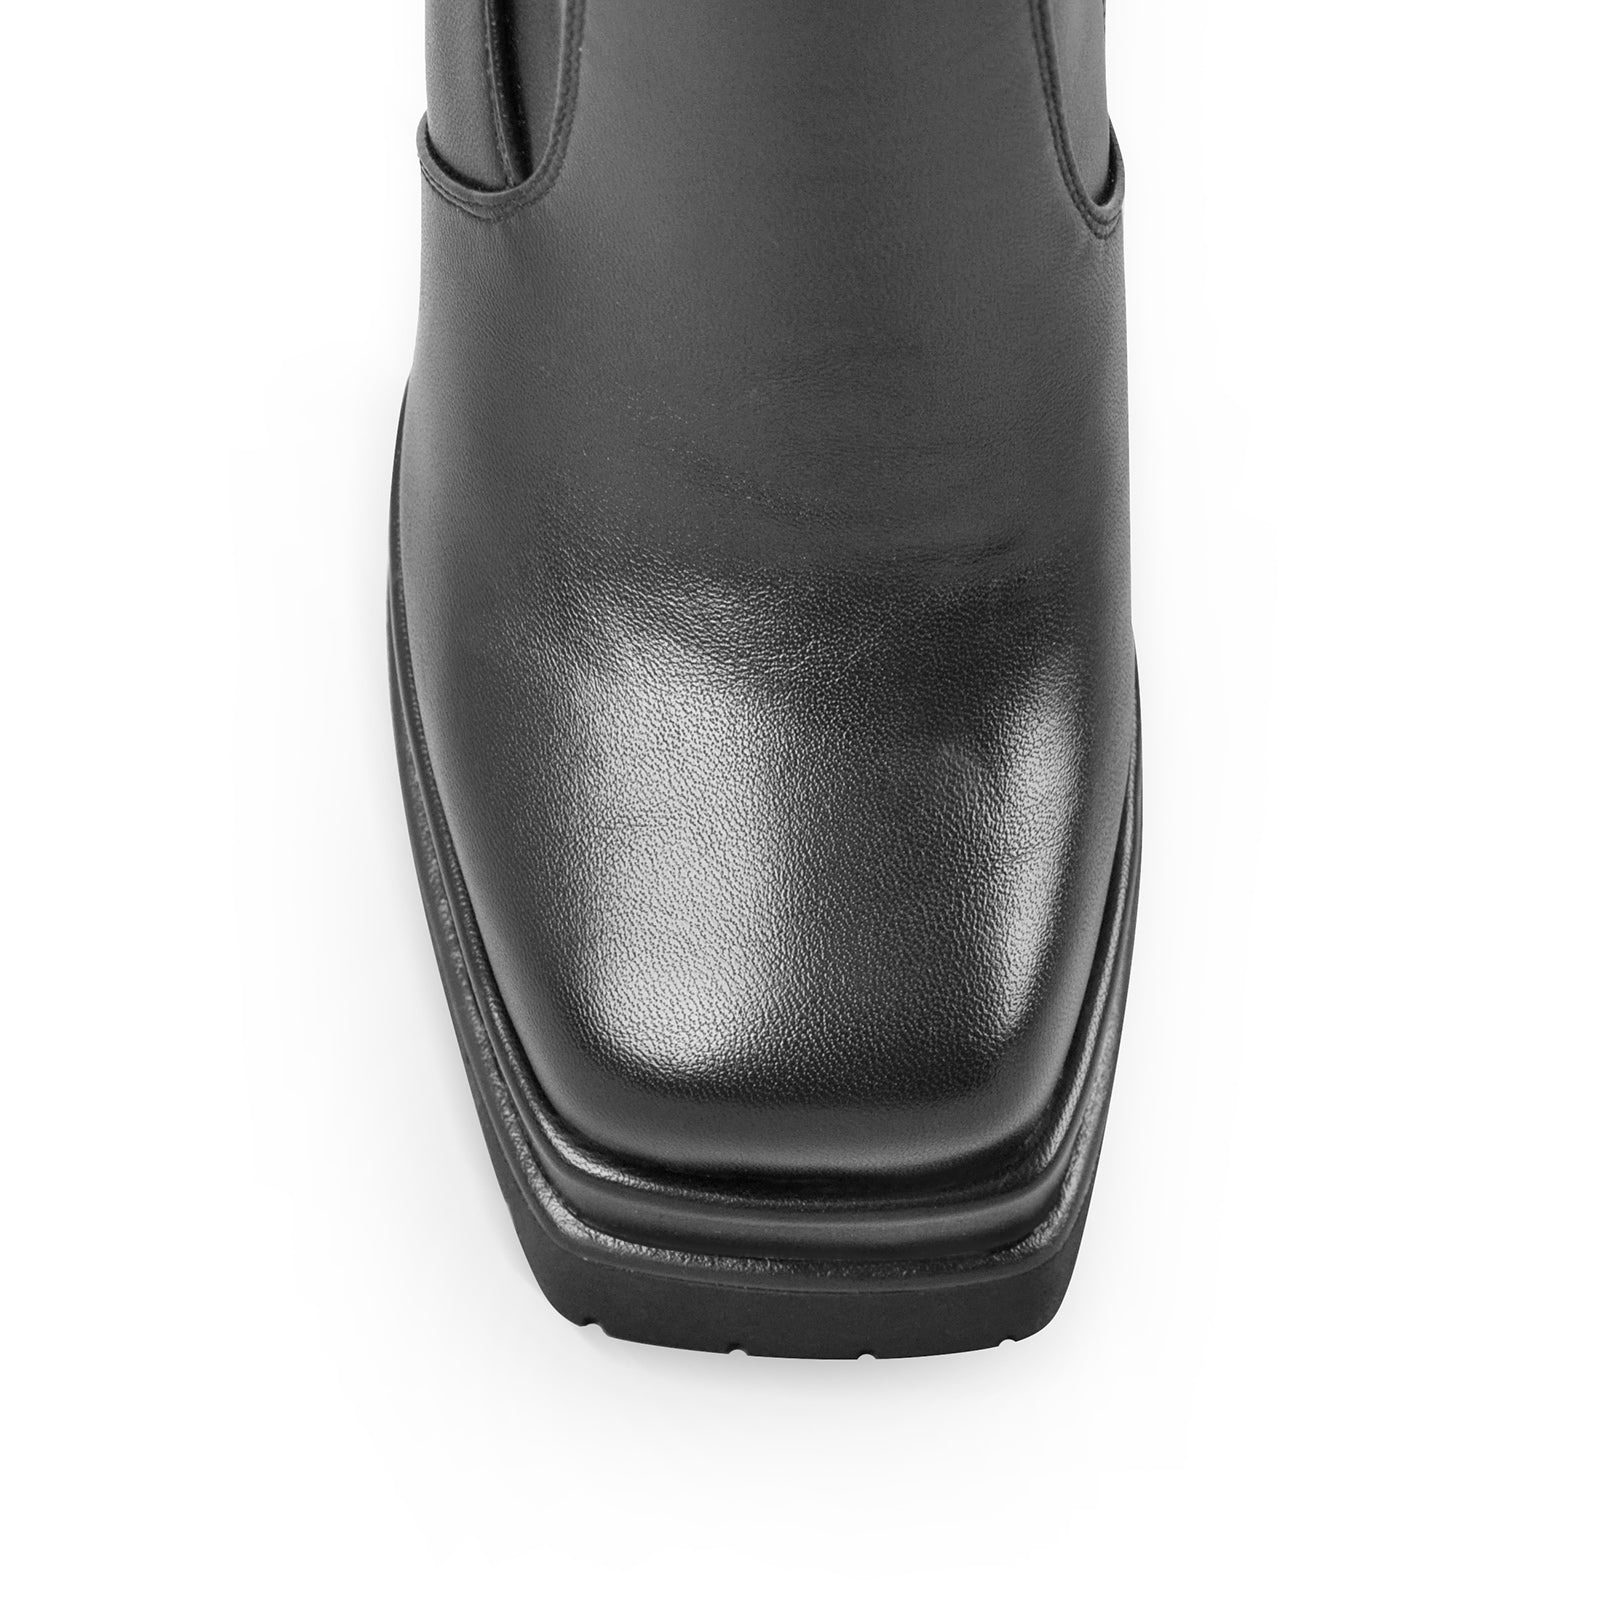 Double Platform Zipper Chunky Heel Ankle Boots – Onlymaker